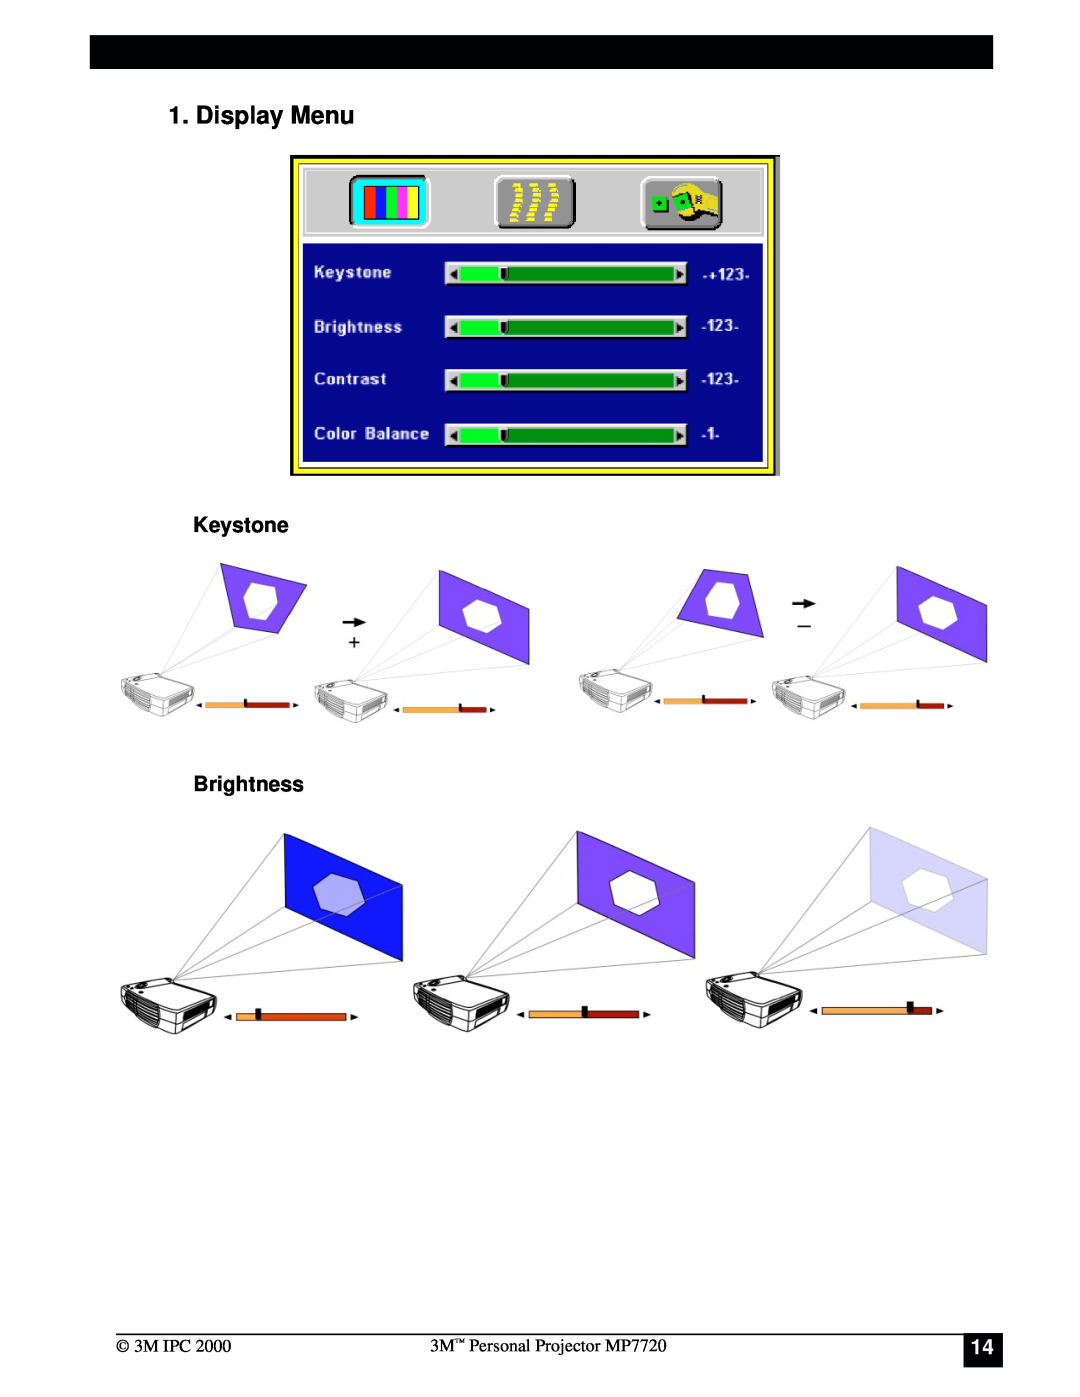 3M manual Display Menu, Table of Contents, Keystone Brightness, 3M IPC, 3M Personal Projector MP7720 